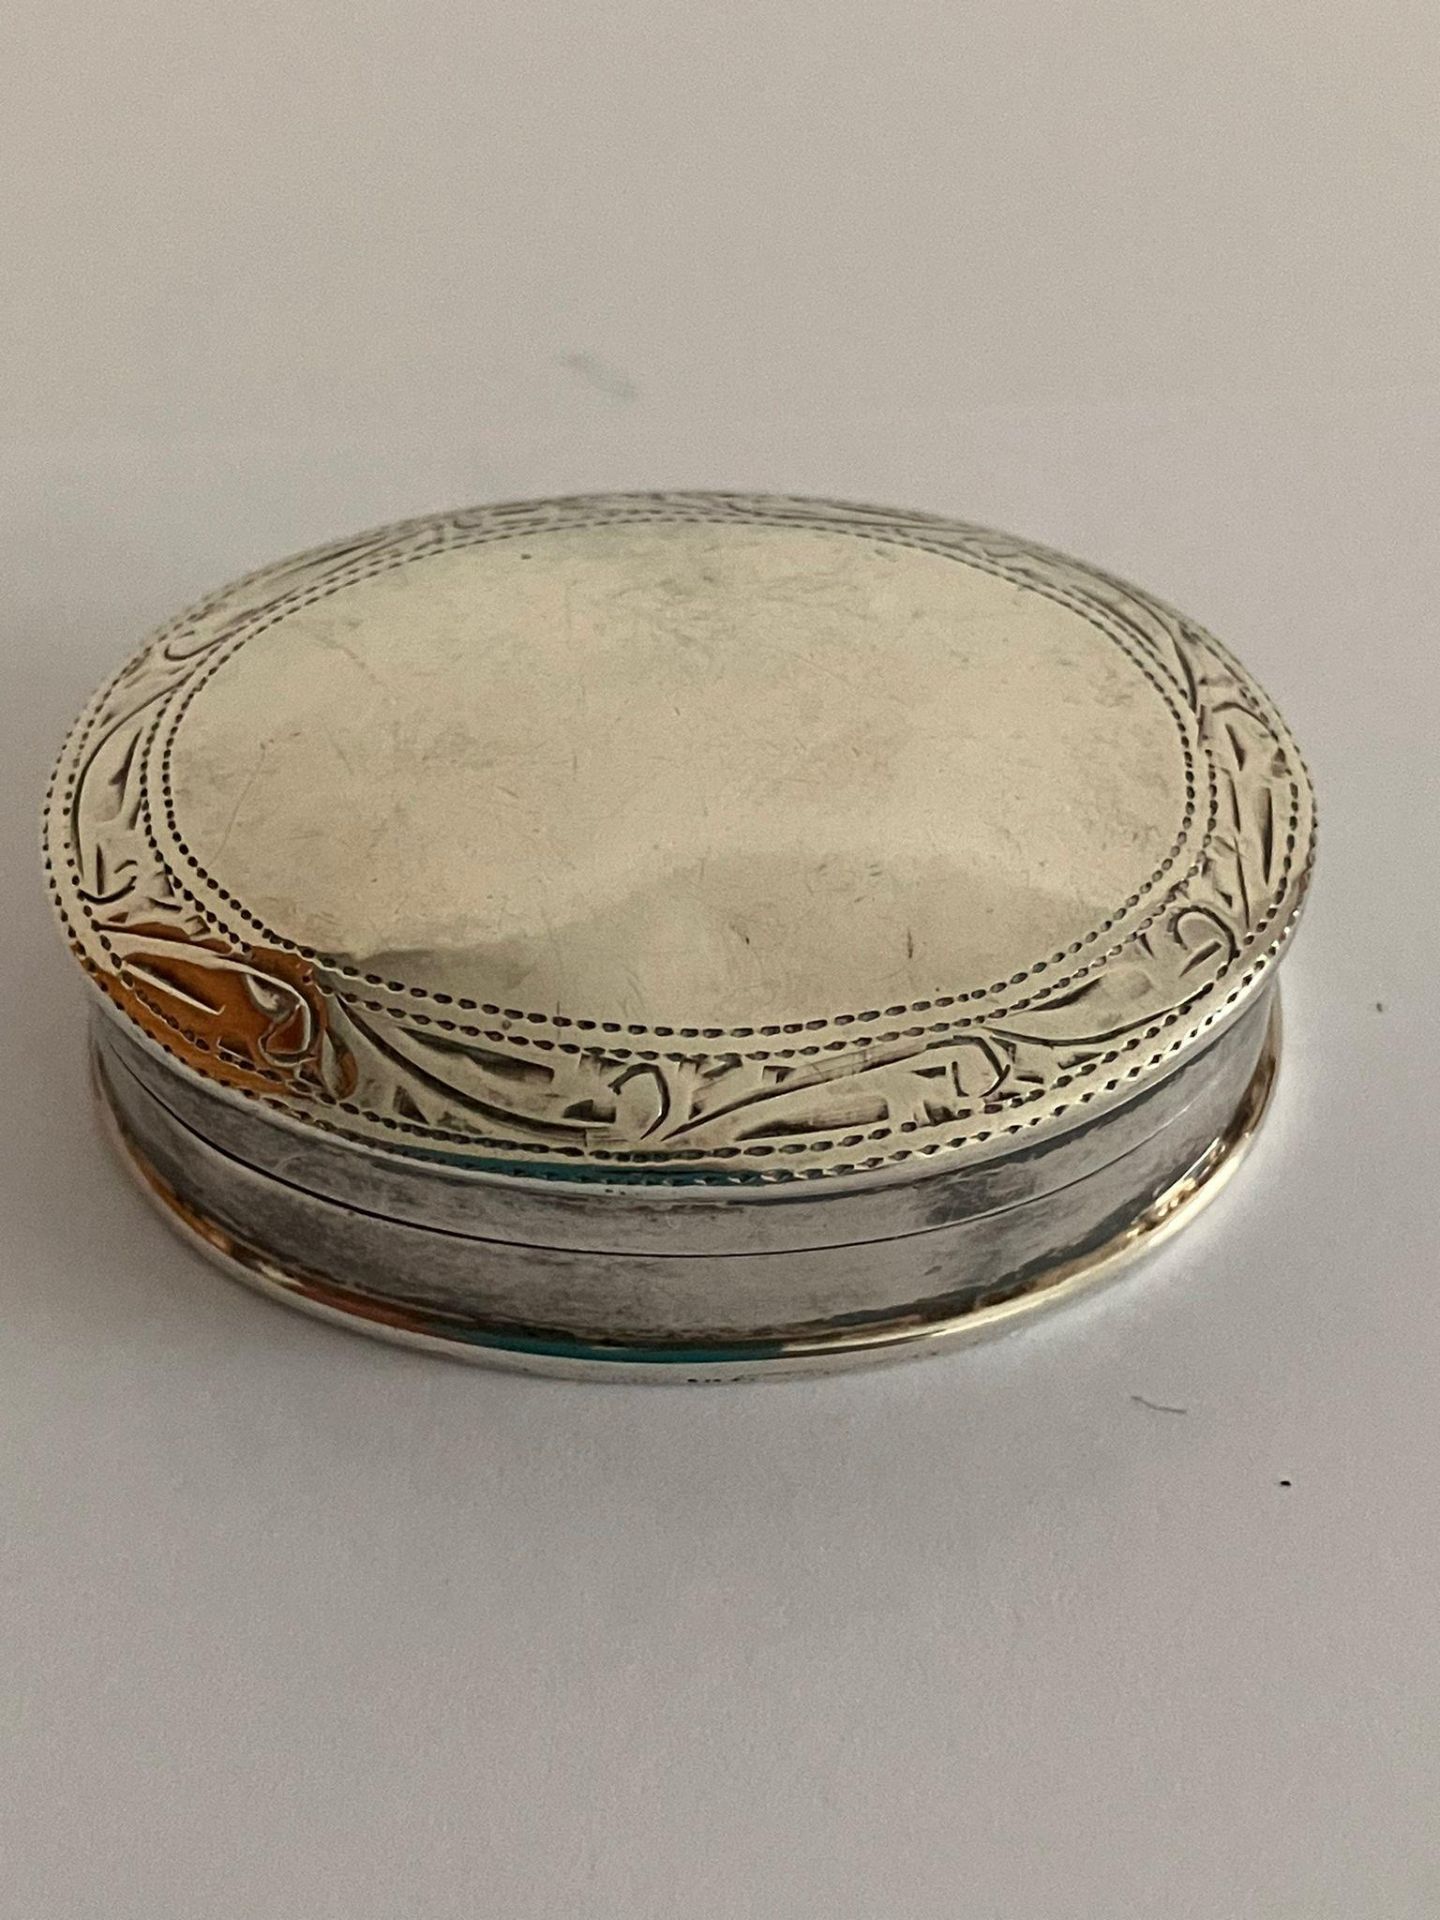 Vintage SILVER PILL BOX. Full hallmark. Oval form with patterned border.4 cm x 3 cm. Excellent - Bild 3 aus 3